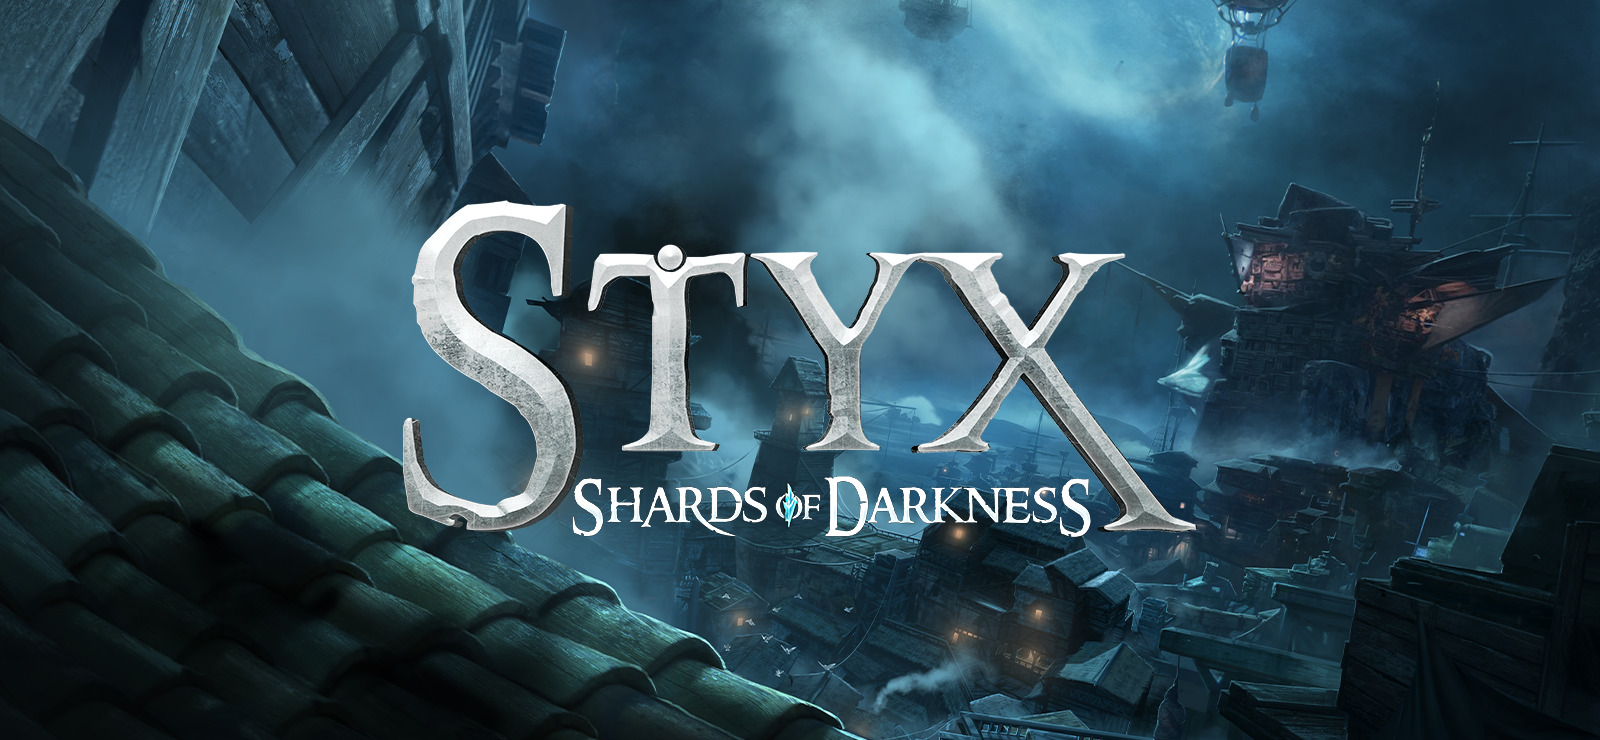 download free styx shards of darkness